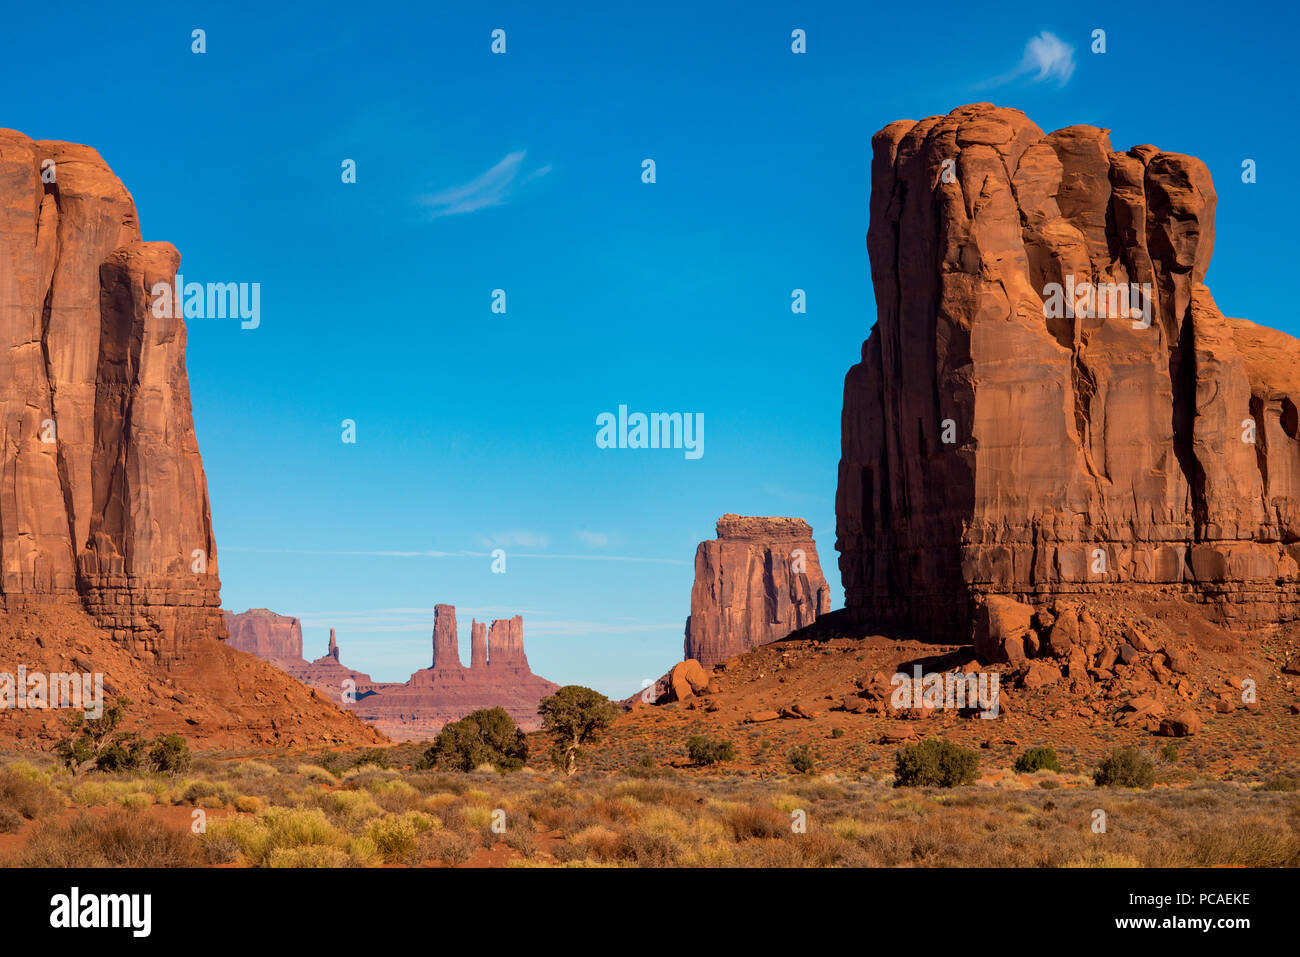 The Monument Valley Navajo Tribal Park, Arizona, United States of America, North America Stock Photo